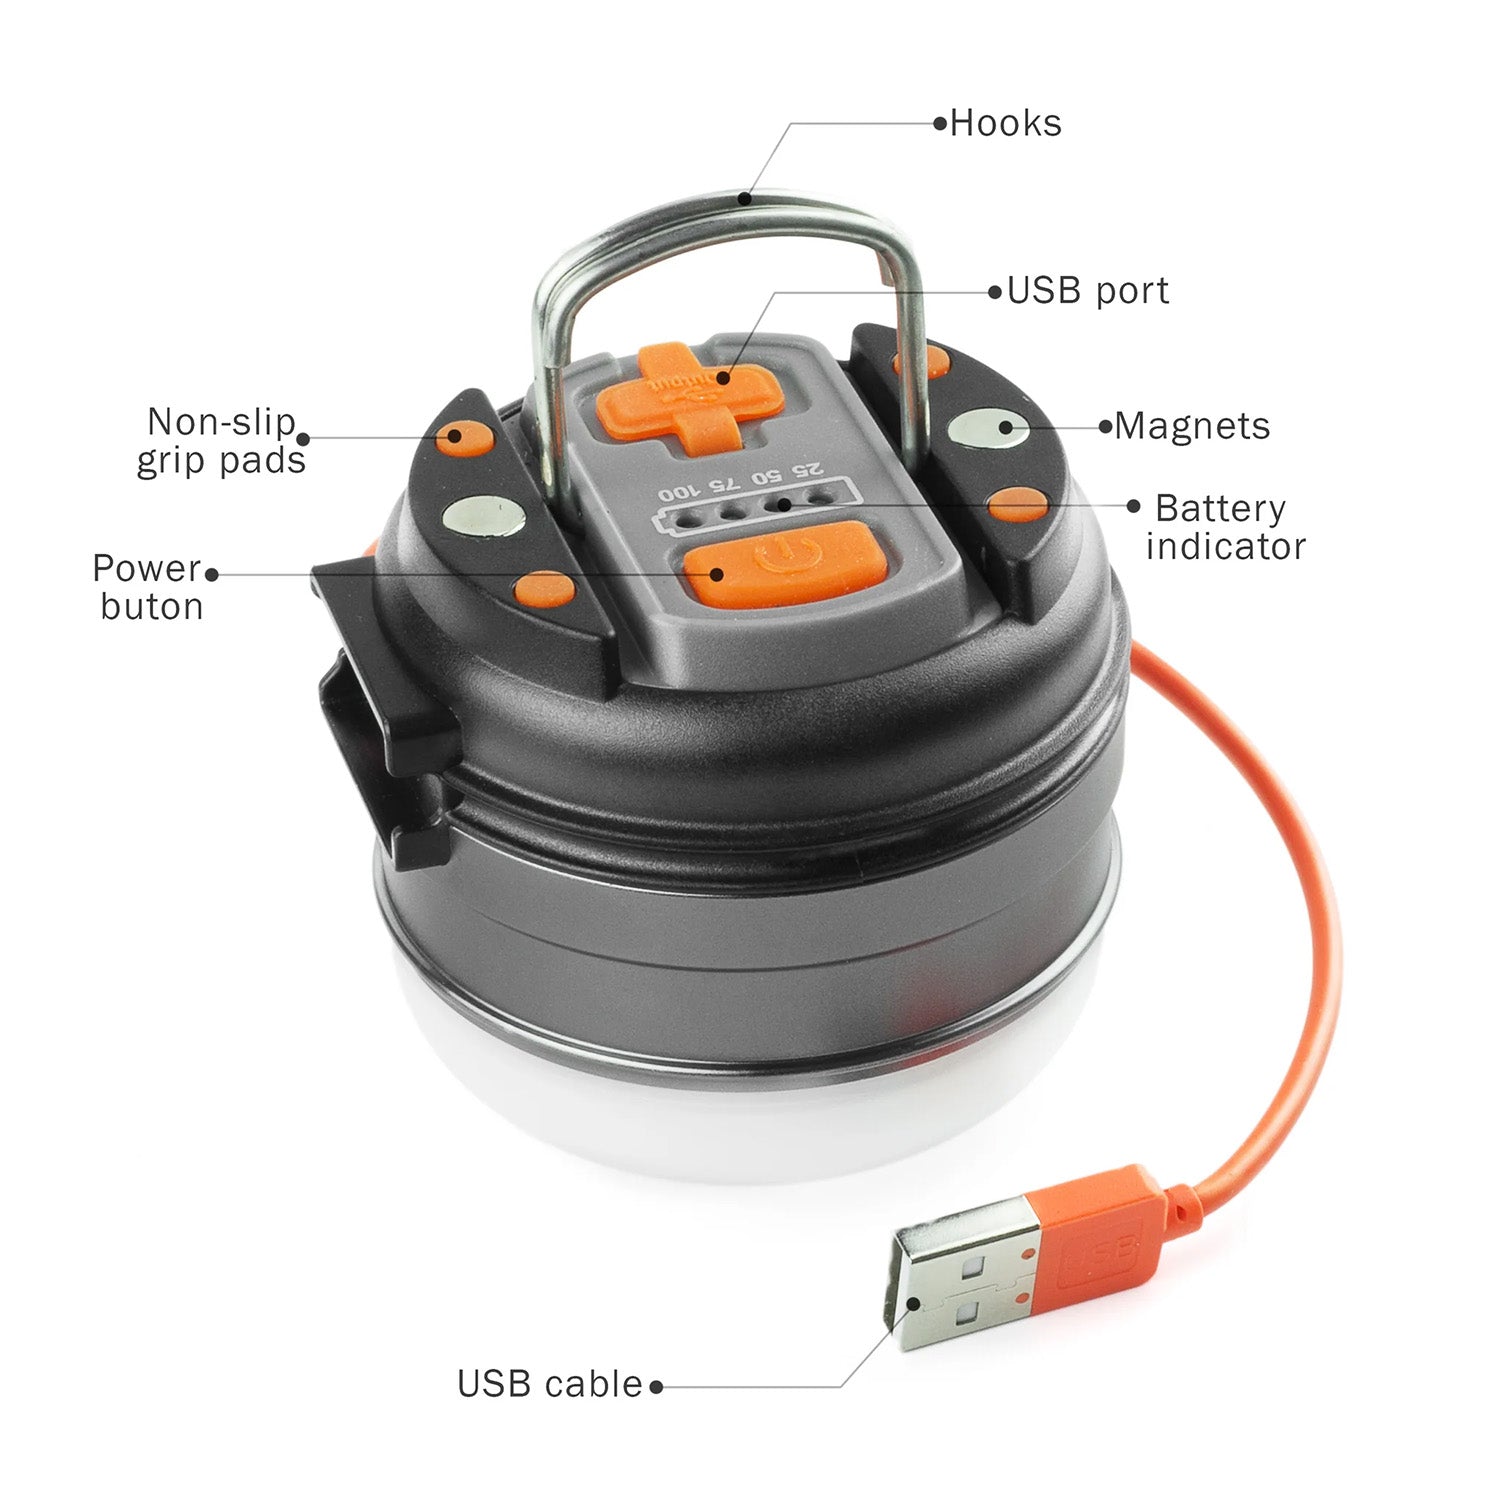 Wagan Brite-Nite DUO USB Lantern Features